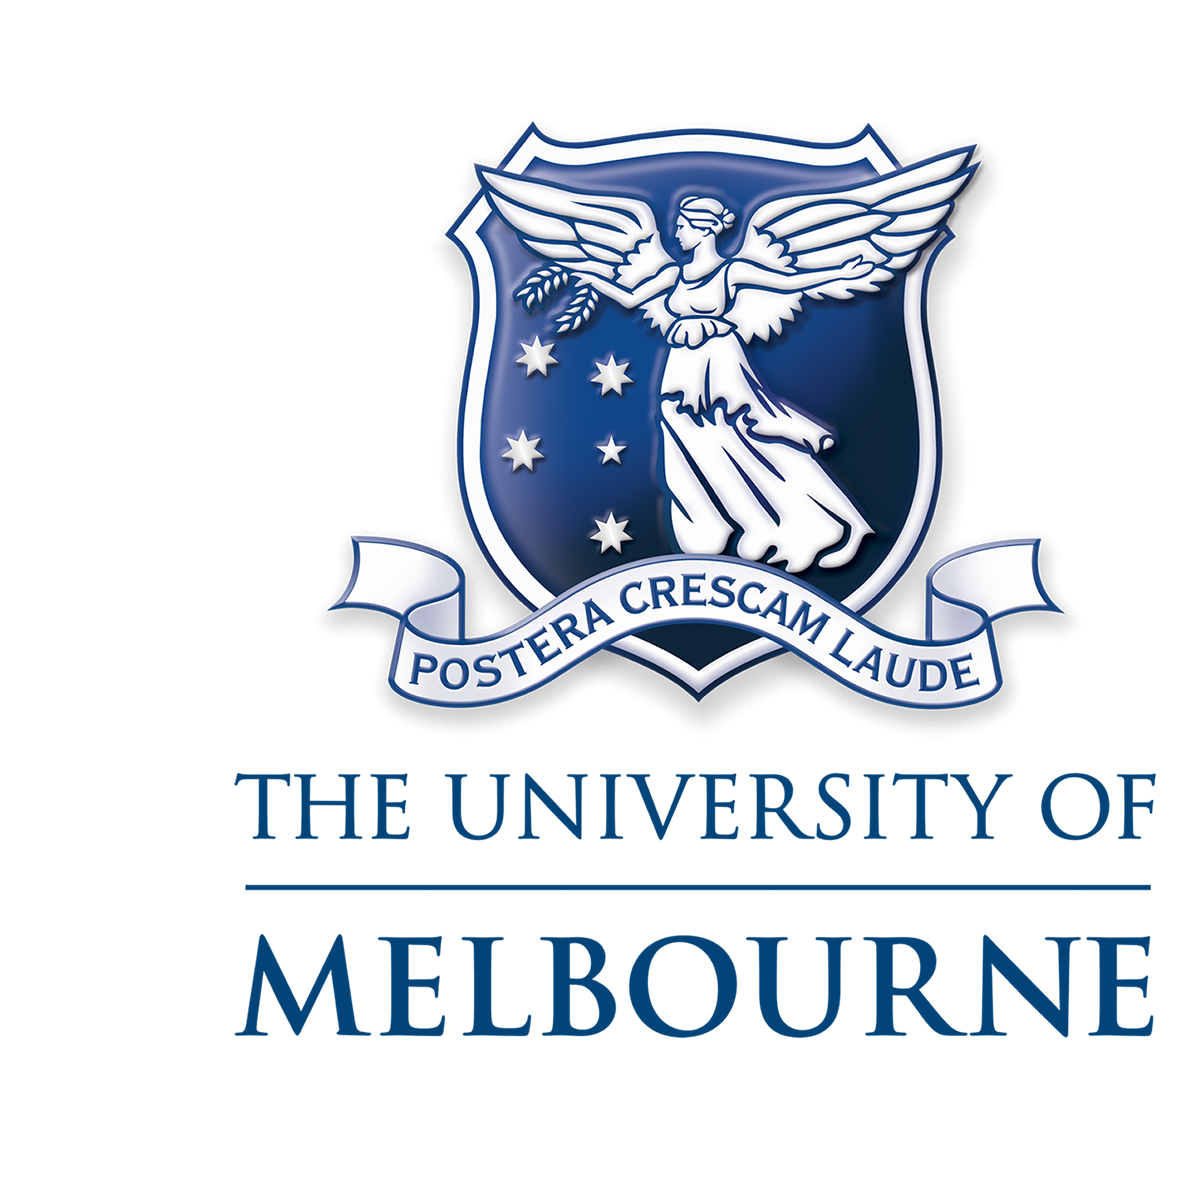 Famous University Logos